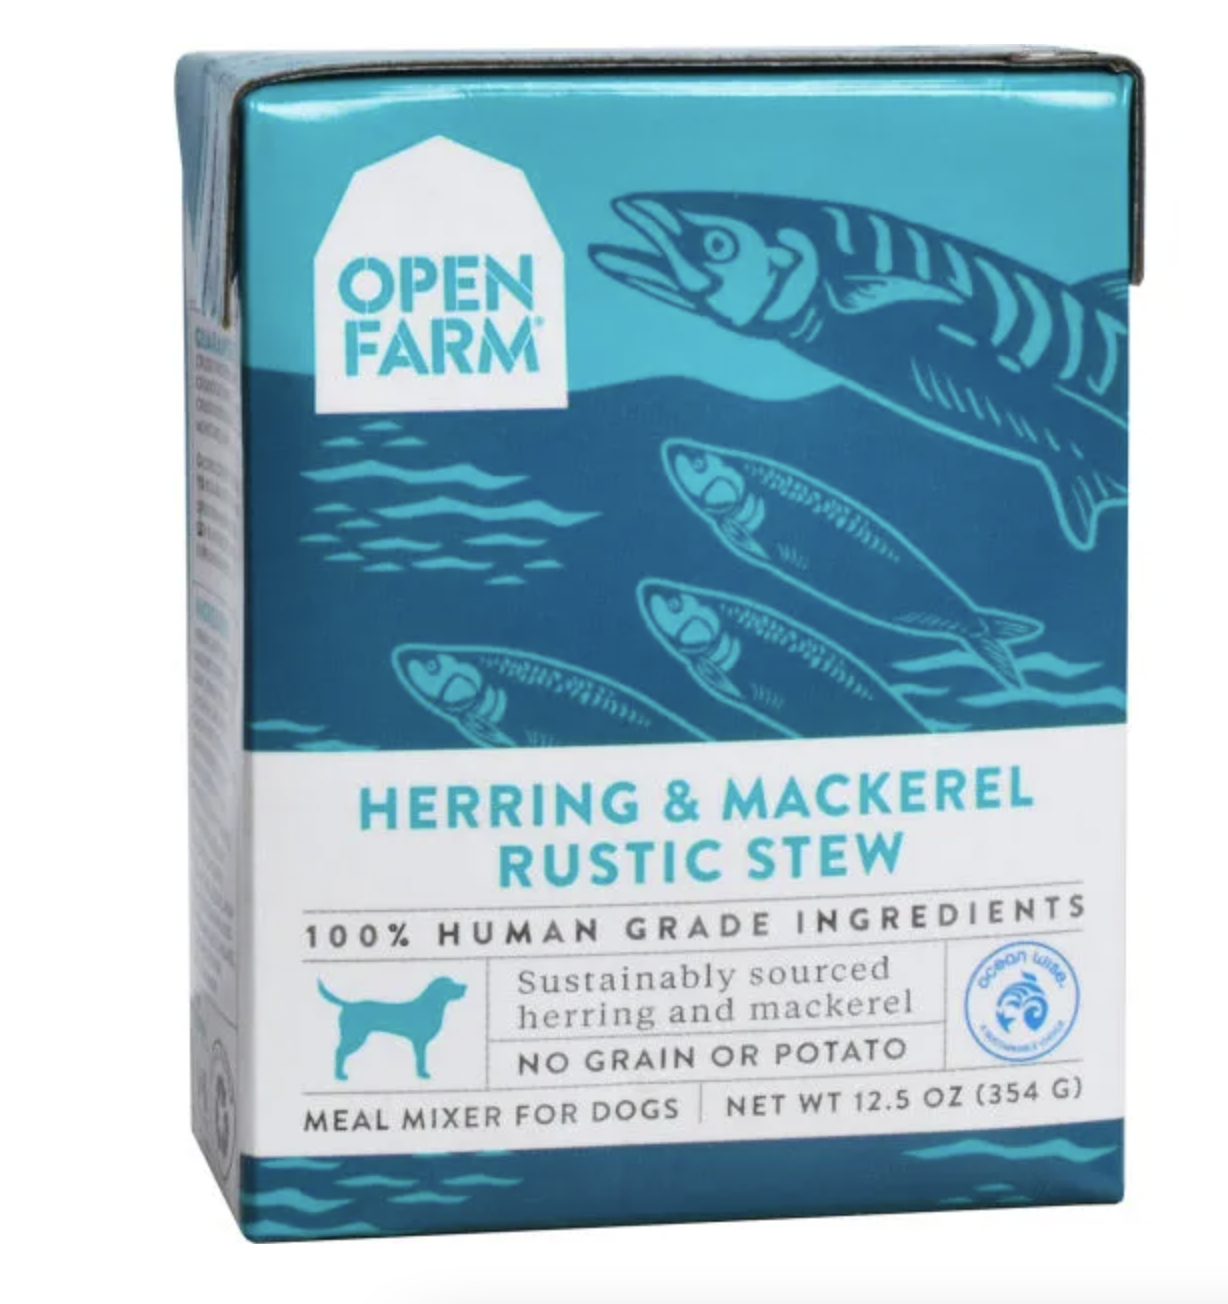 Herring & Mackerel Rustic Stew - Open Farm